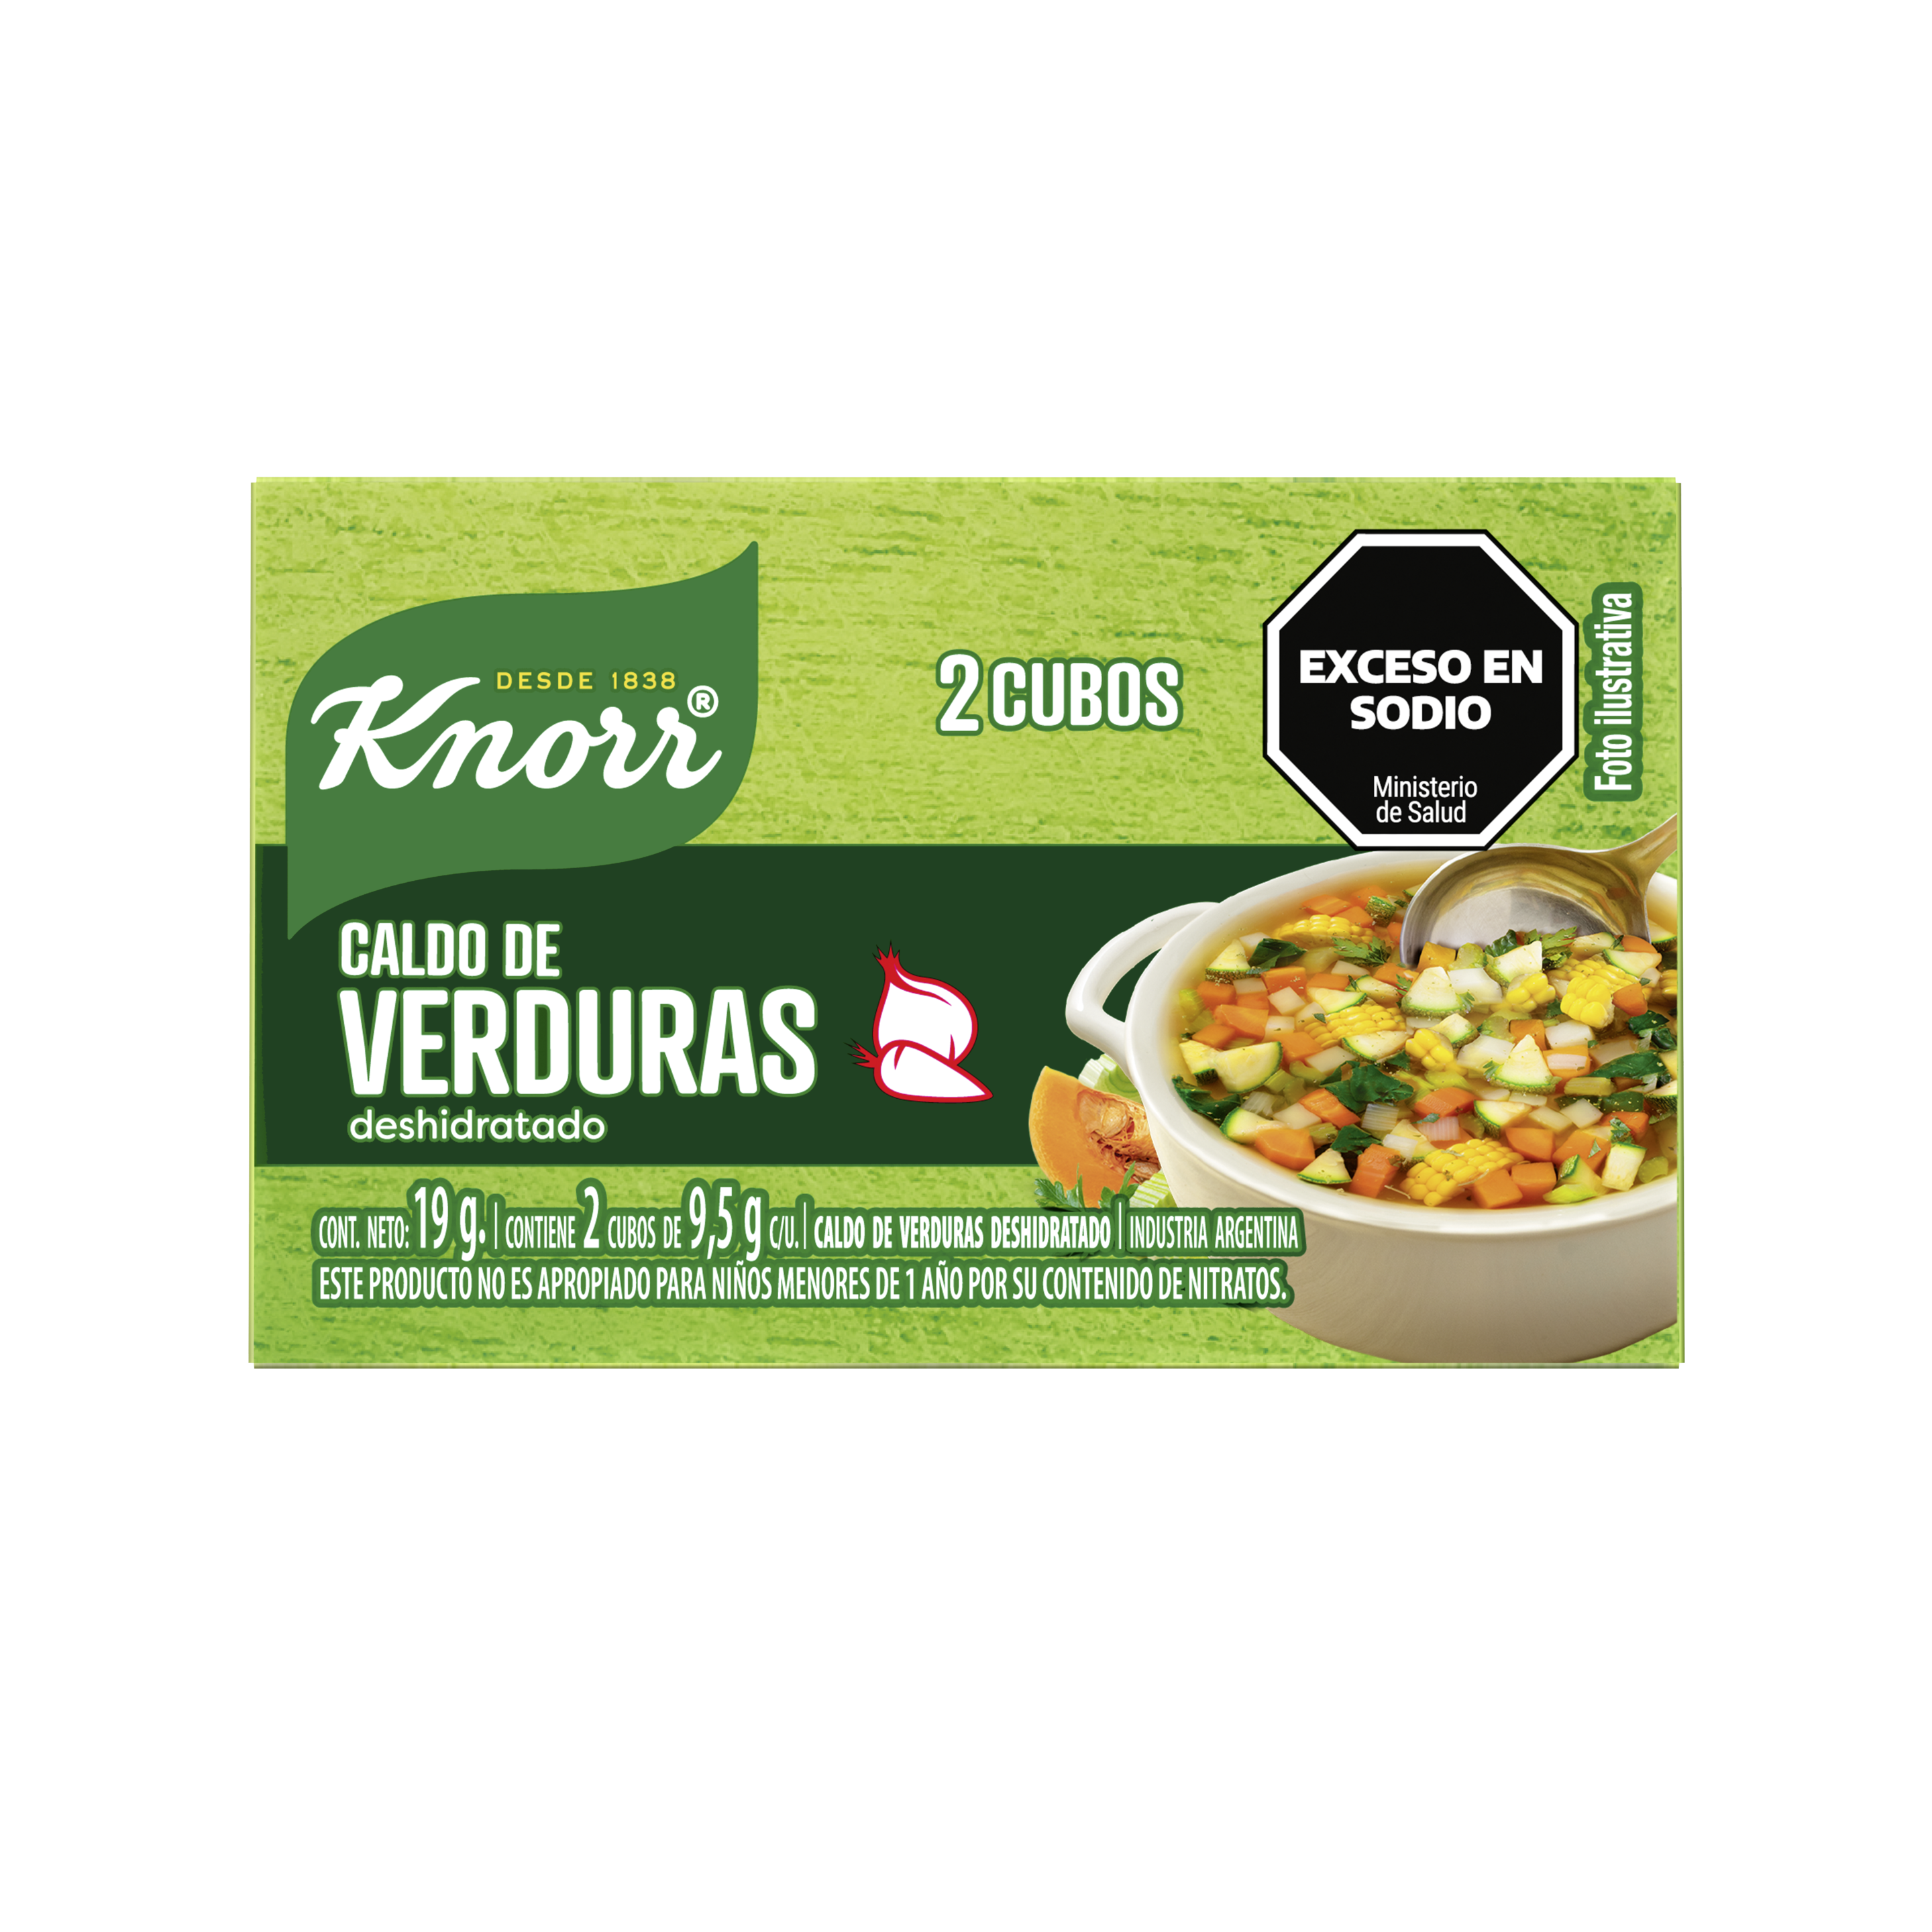 Imagen de envase Caldo de Verdura x2 Knorr